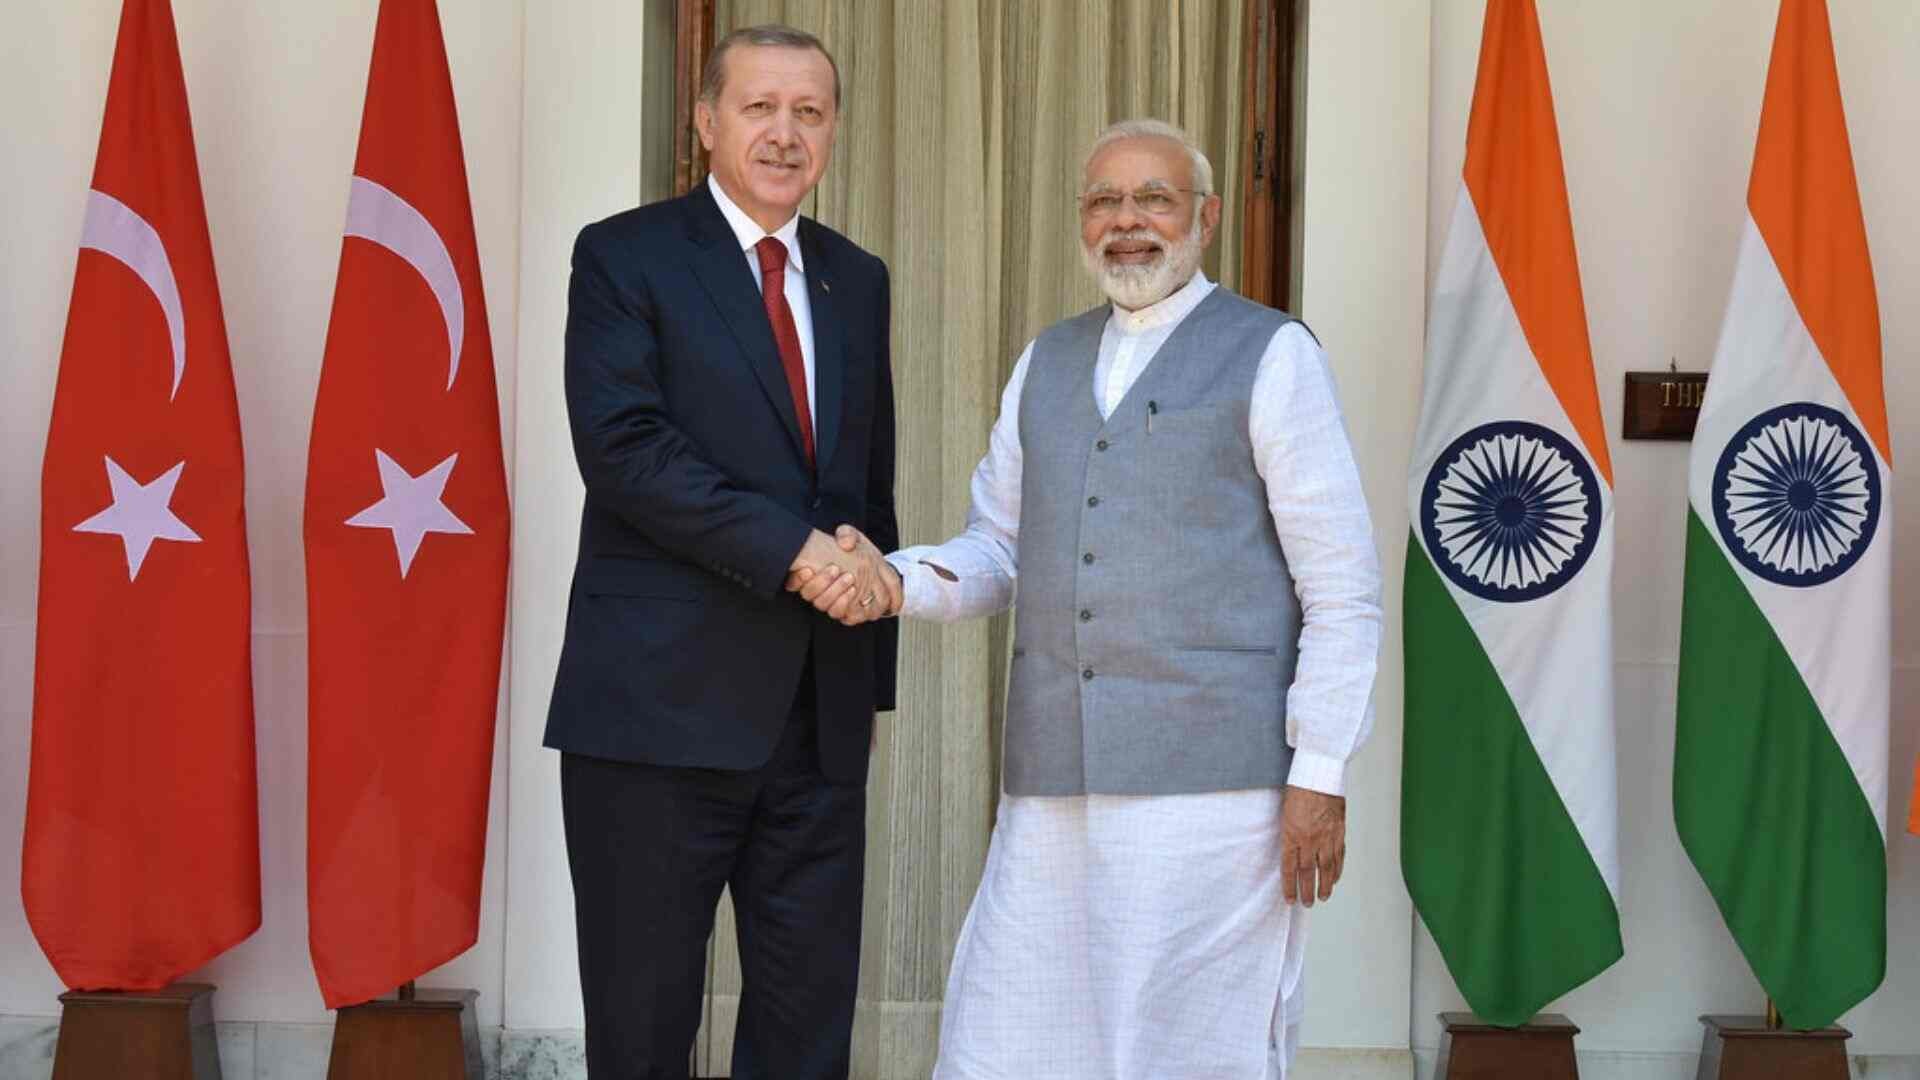  India Denies Turkish Military Export Ban Reports as Baseless Disinformation